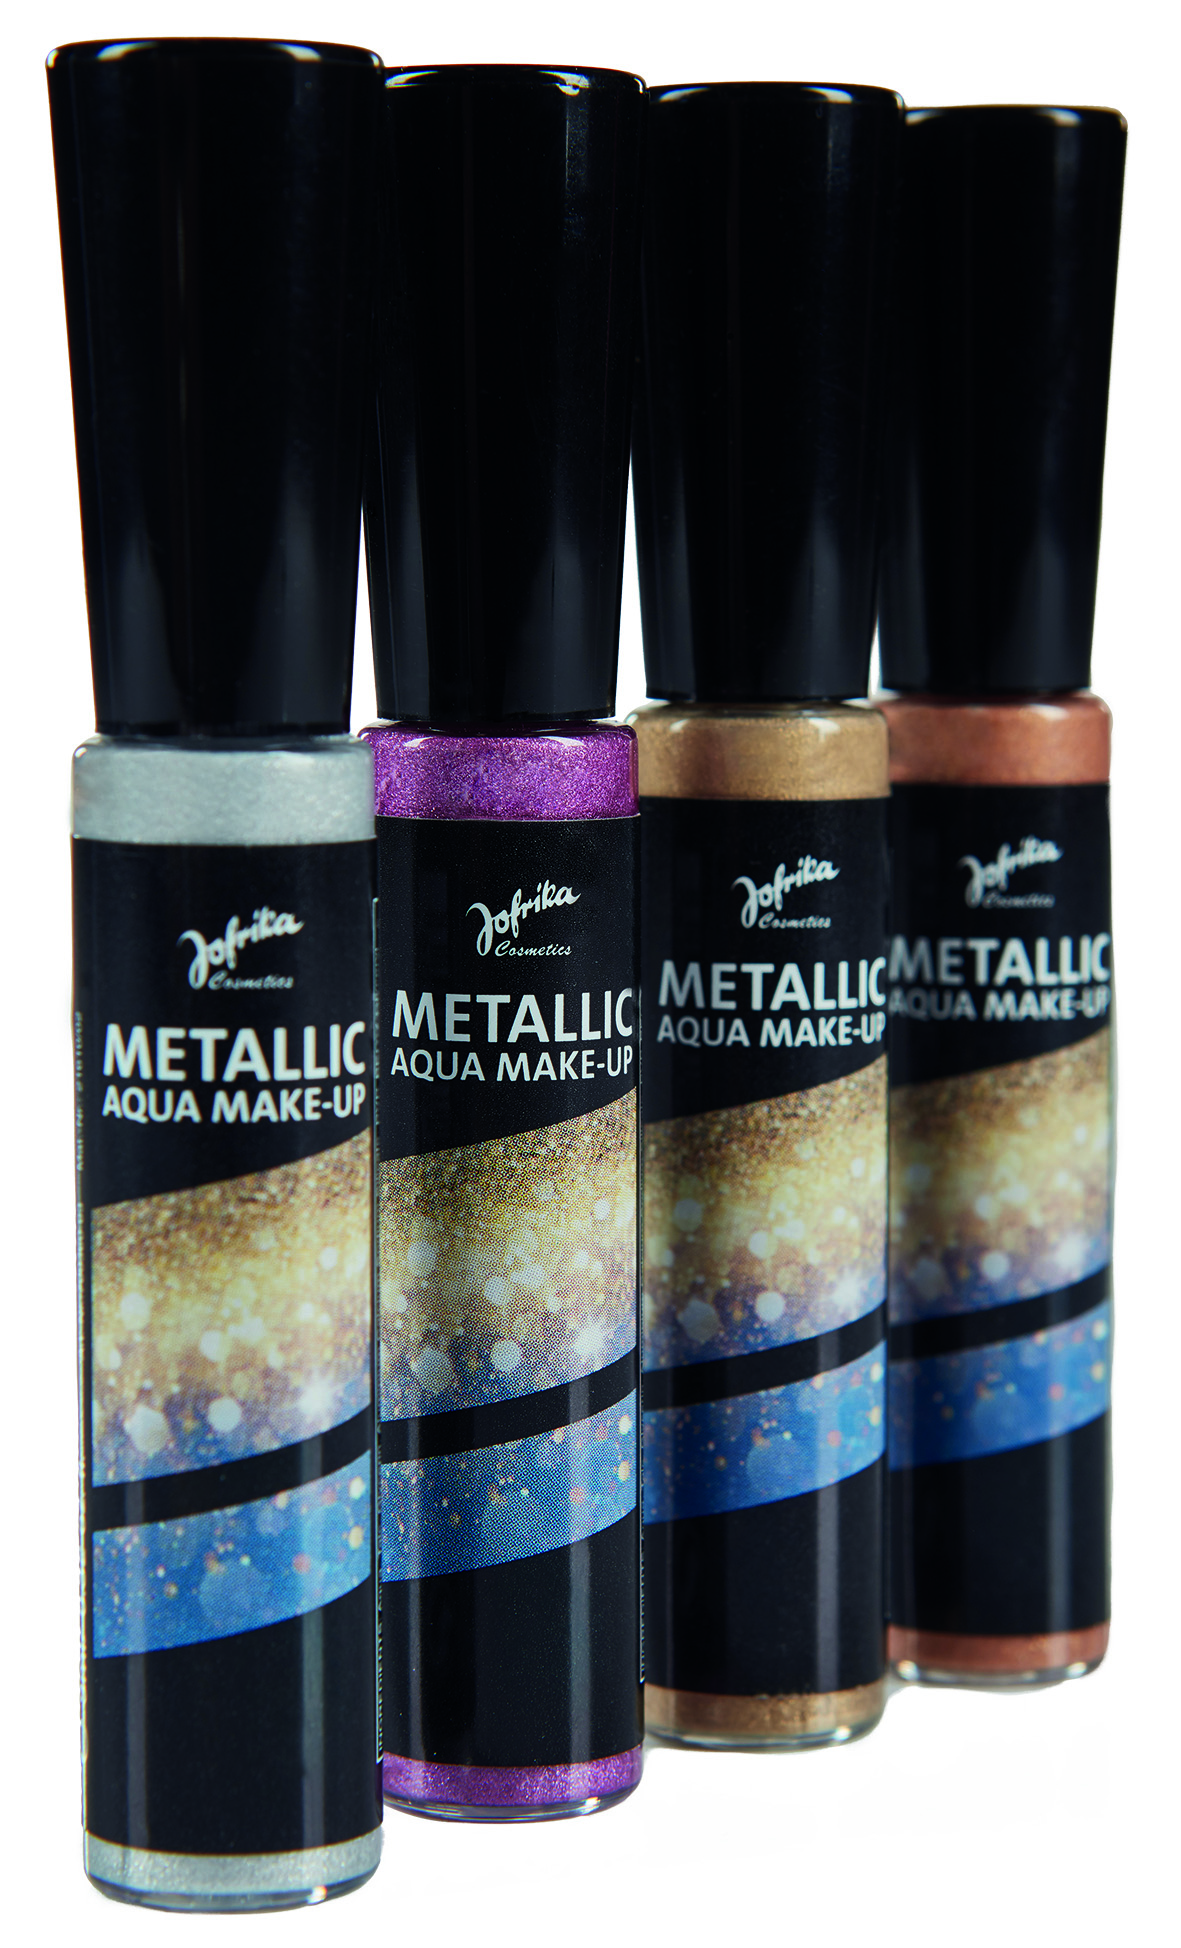 Jofrika Cosmetics 70036x Metallic Aqua make up, metallisch schimmernd, 4 Farben